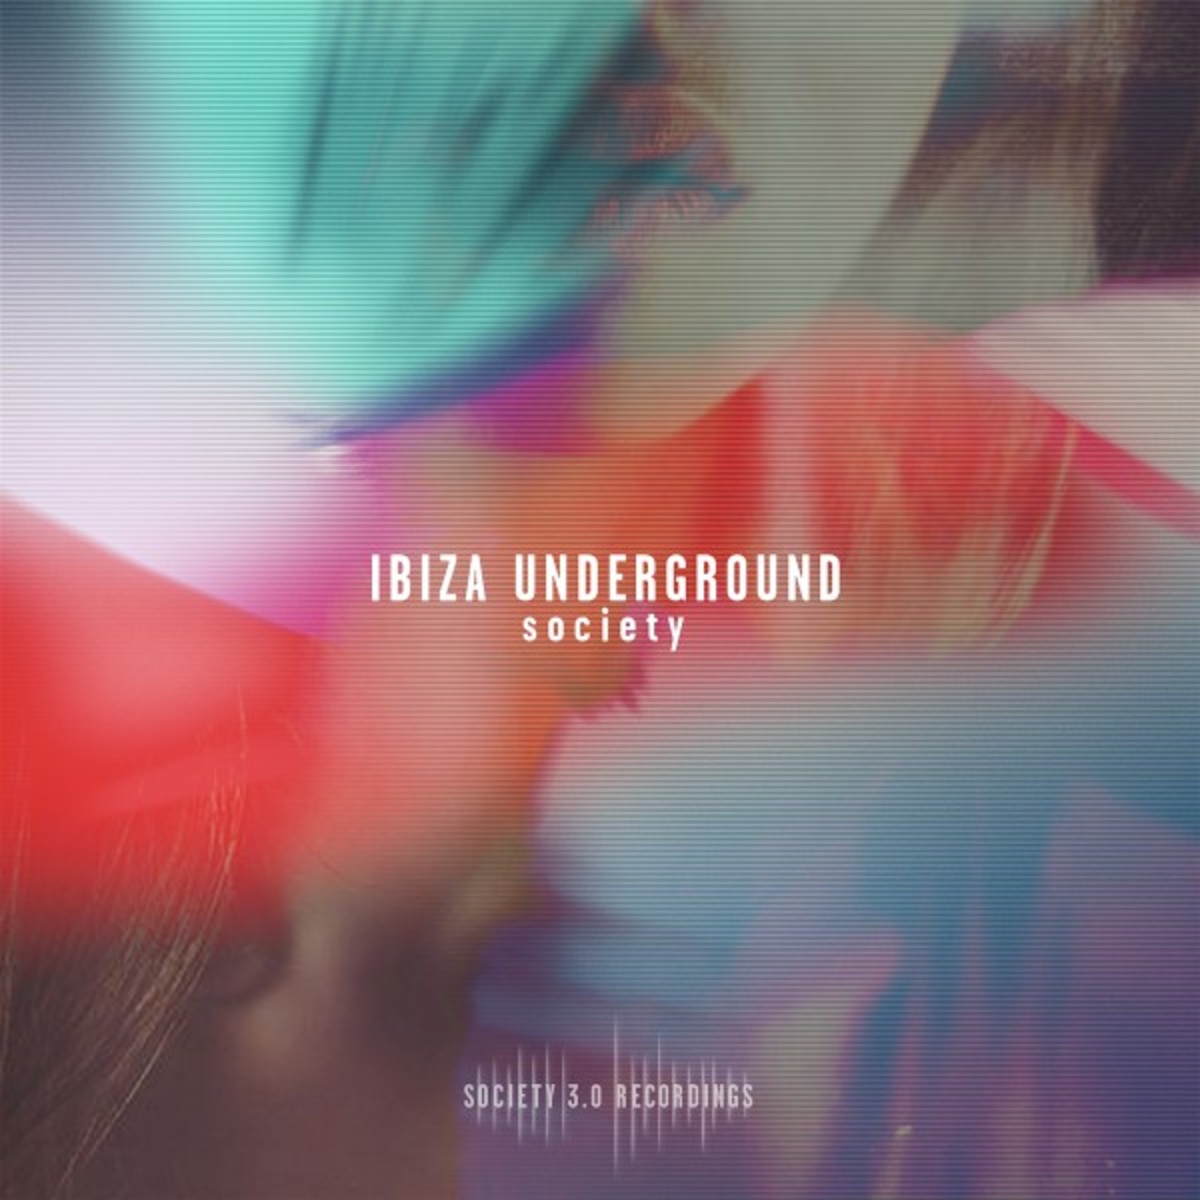 VA - Ibiza Underground Society / Society 3.0